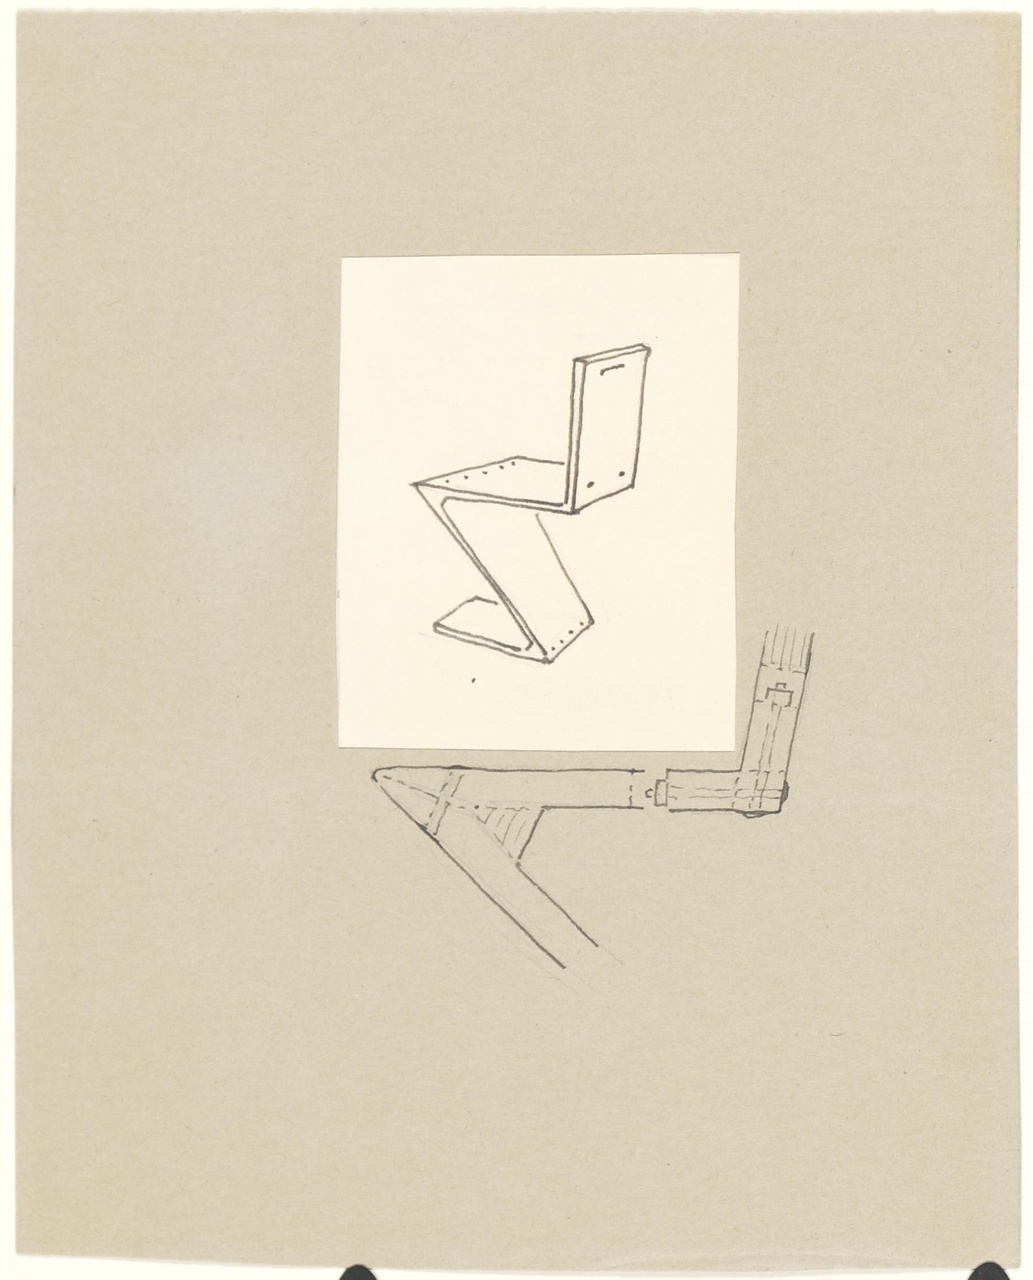 Zigzag meubilair (stoel, zigzagstoel)